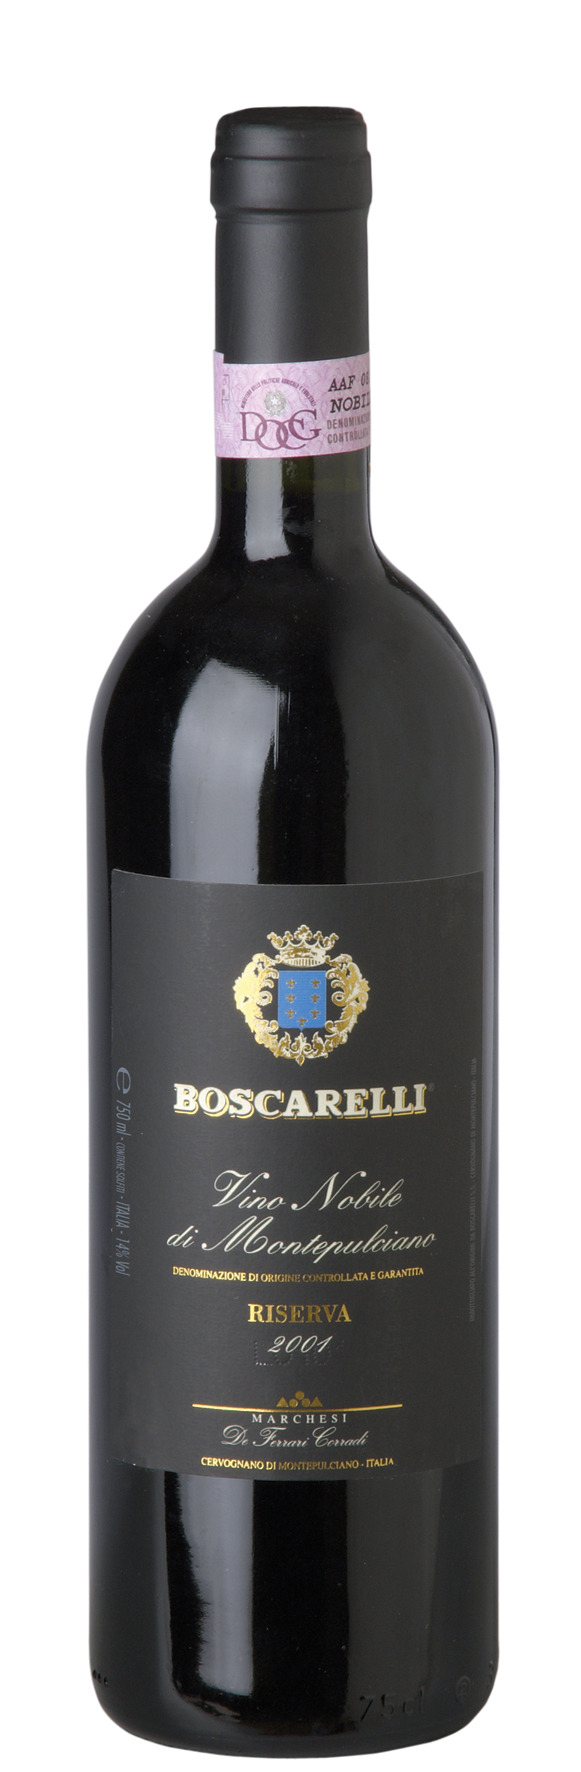 Боскарелли Вино Нобиле ди Монтепульчано 2015 DOCG Ризерва - 0,75 л